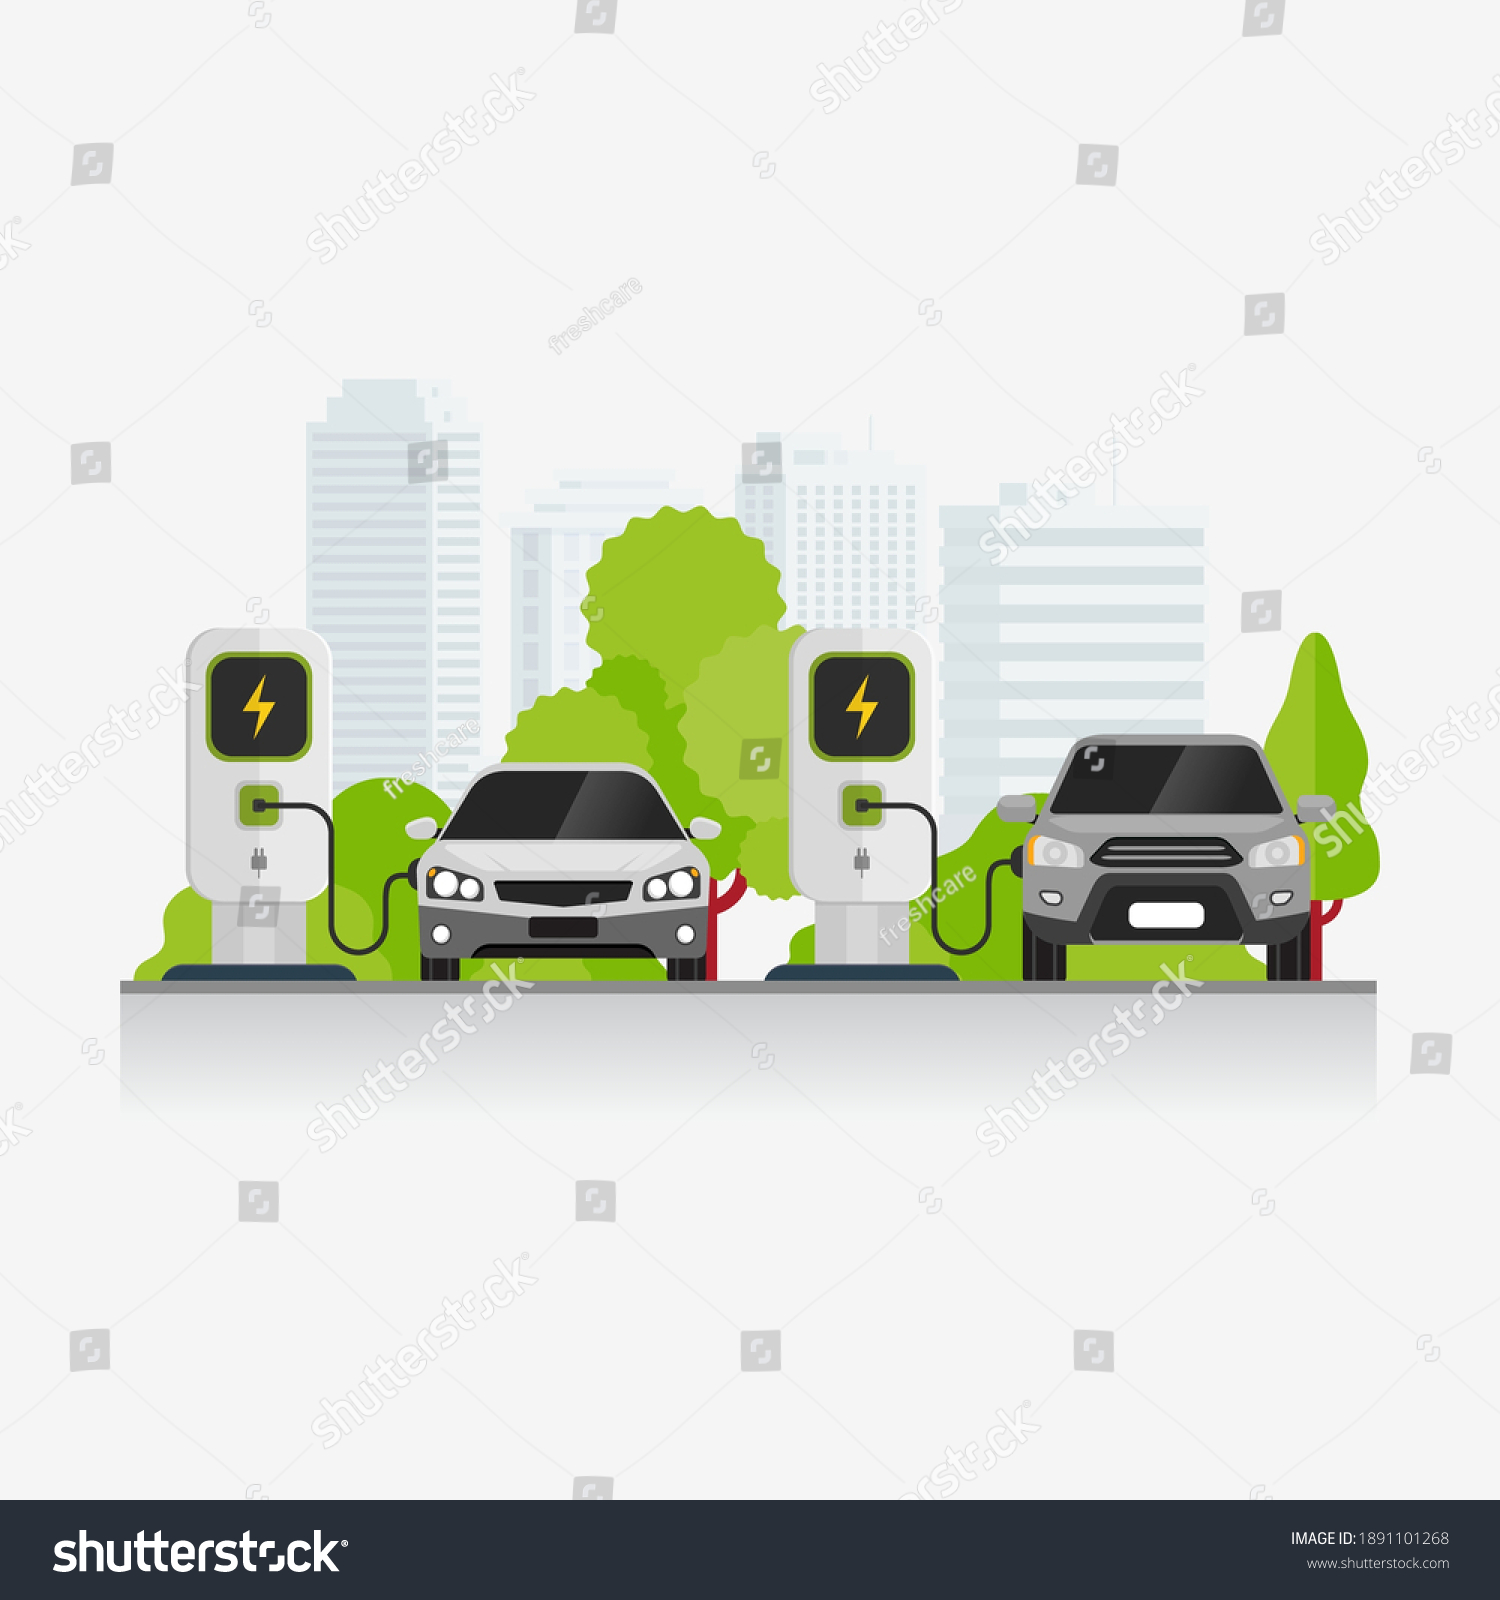 SVG of Charging station design concept. Electric vehicle charging technology at parking area vector illustration svg